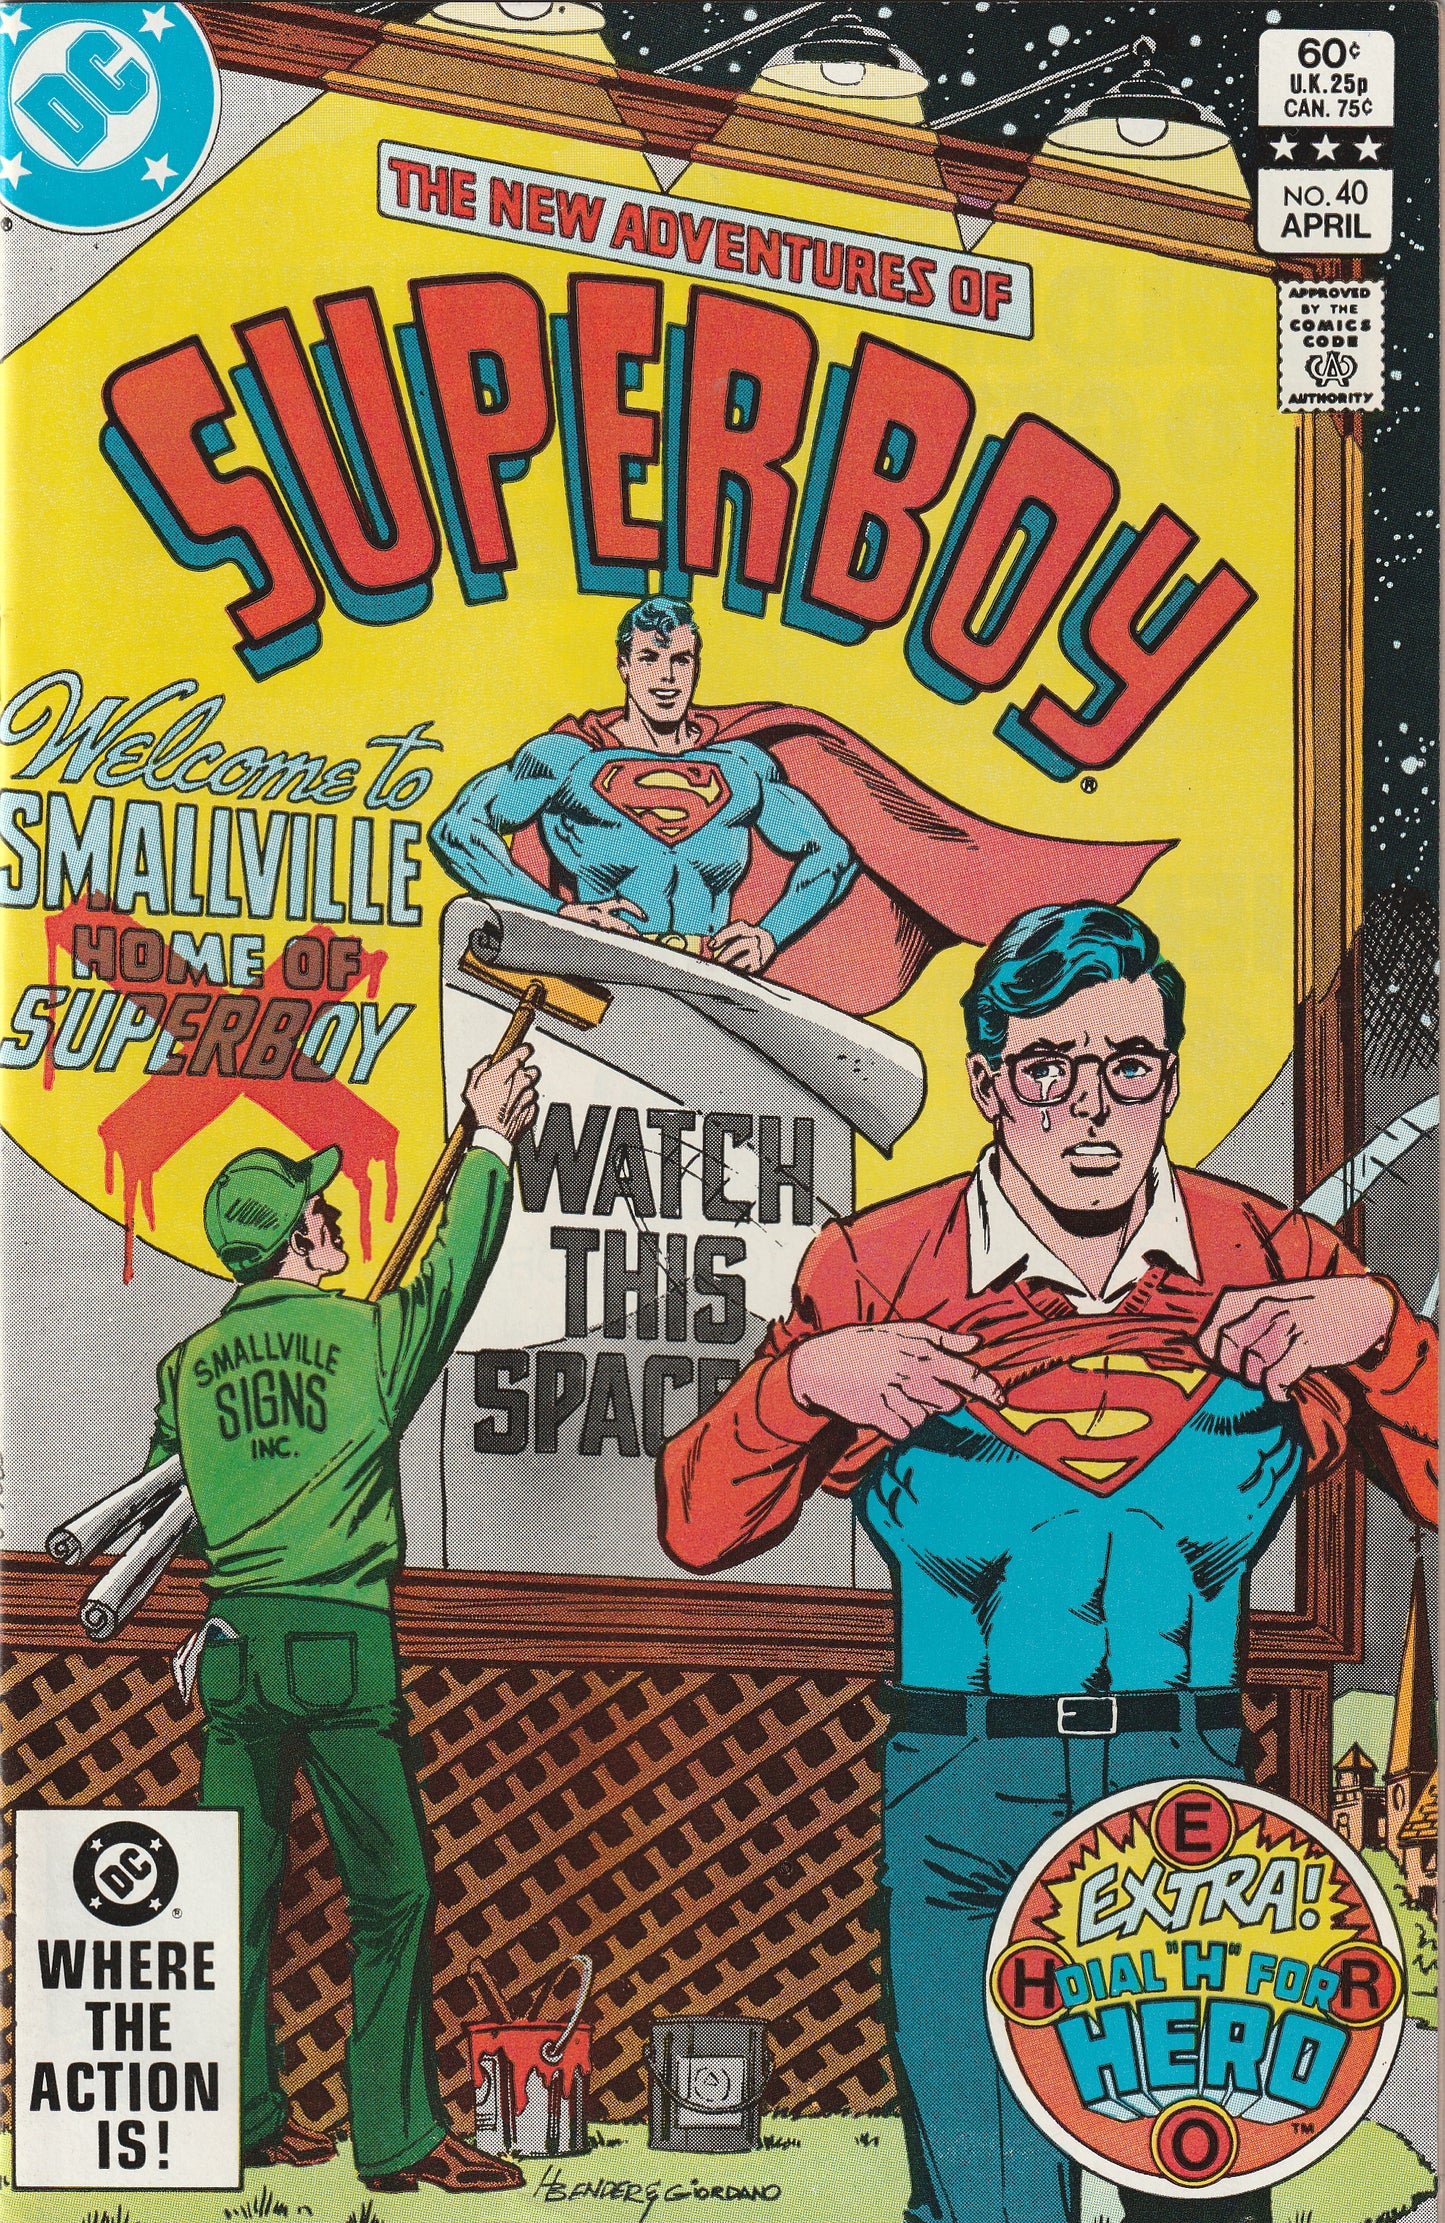 New Adventures of Superboy #40 (1983)